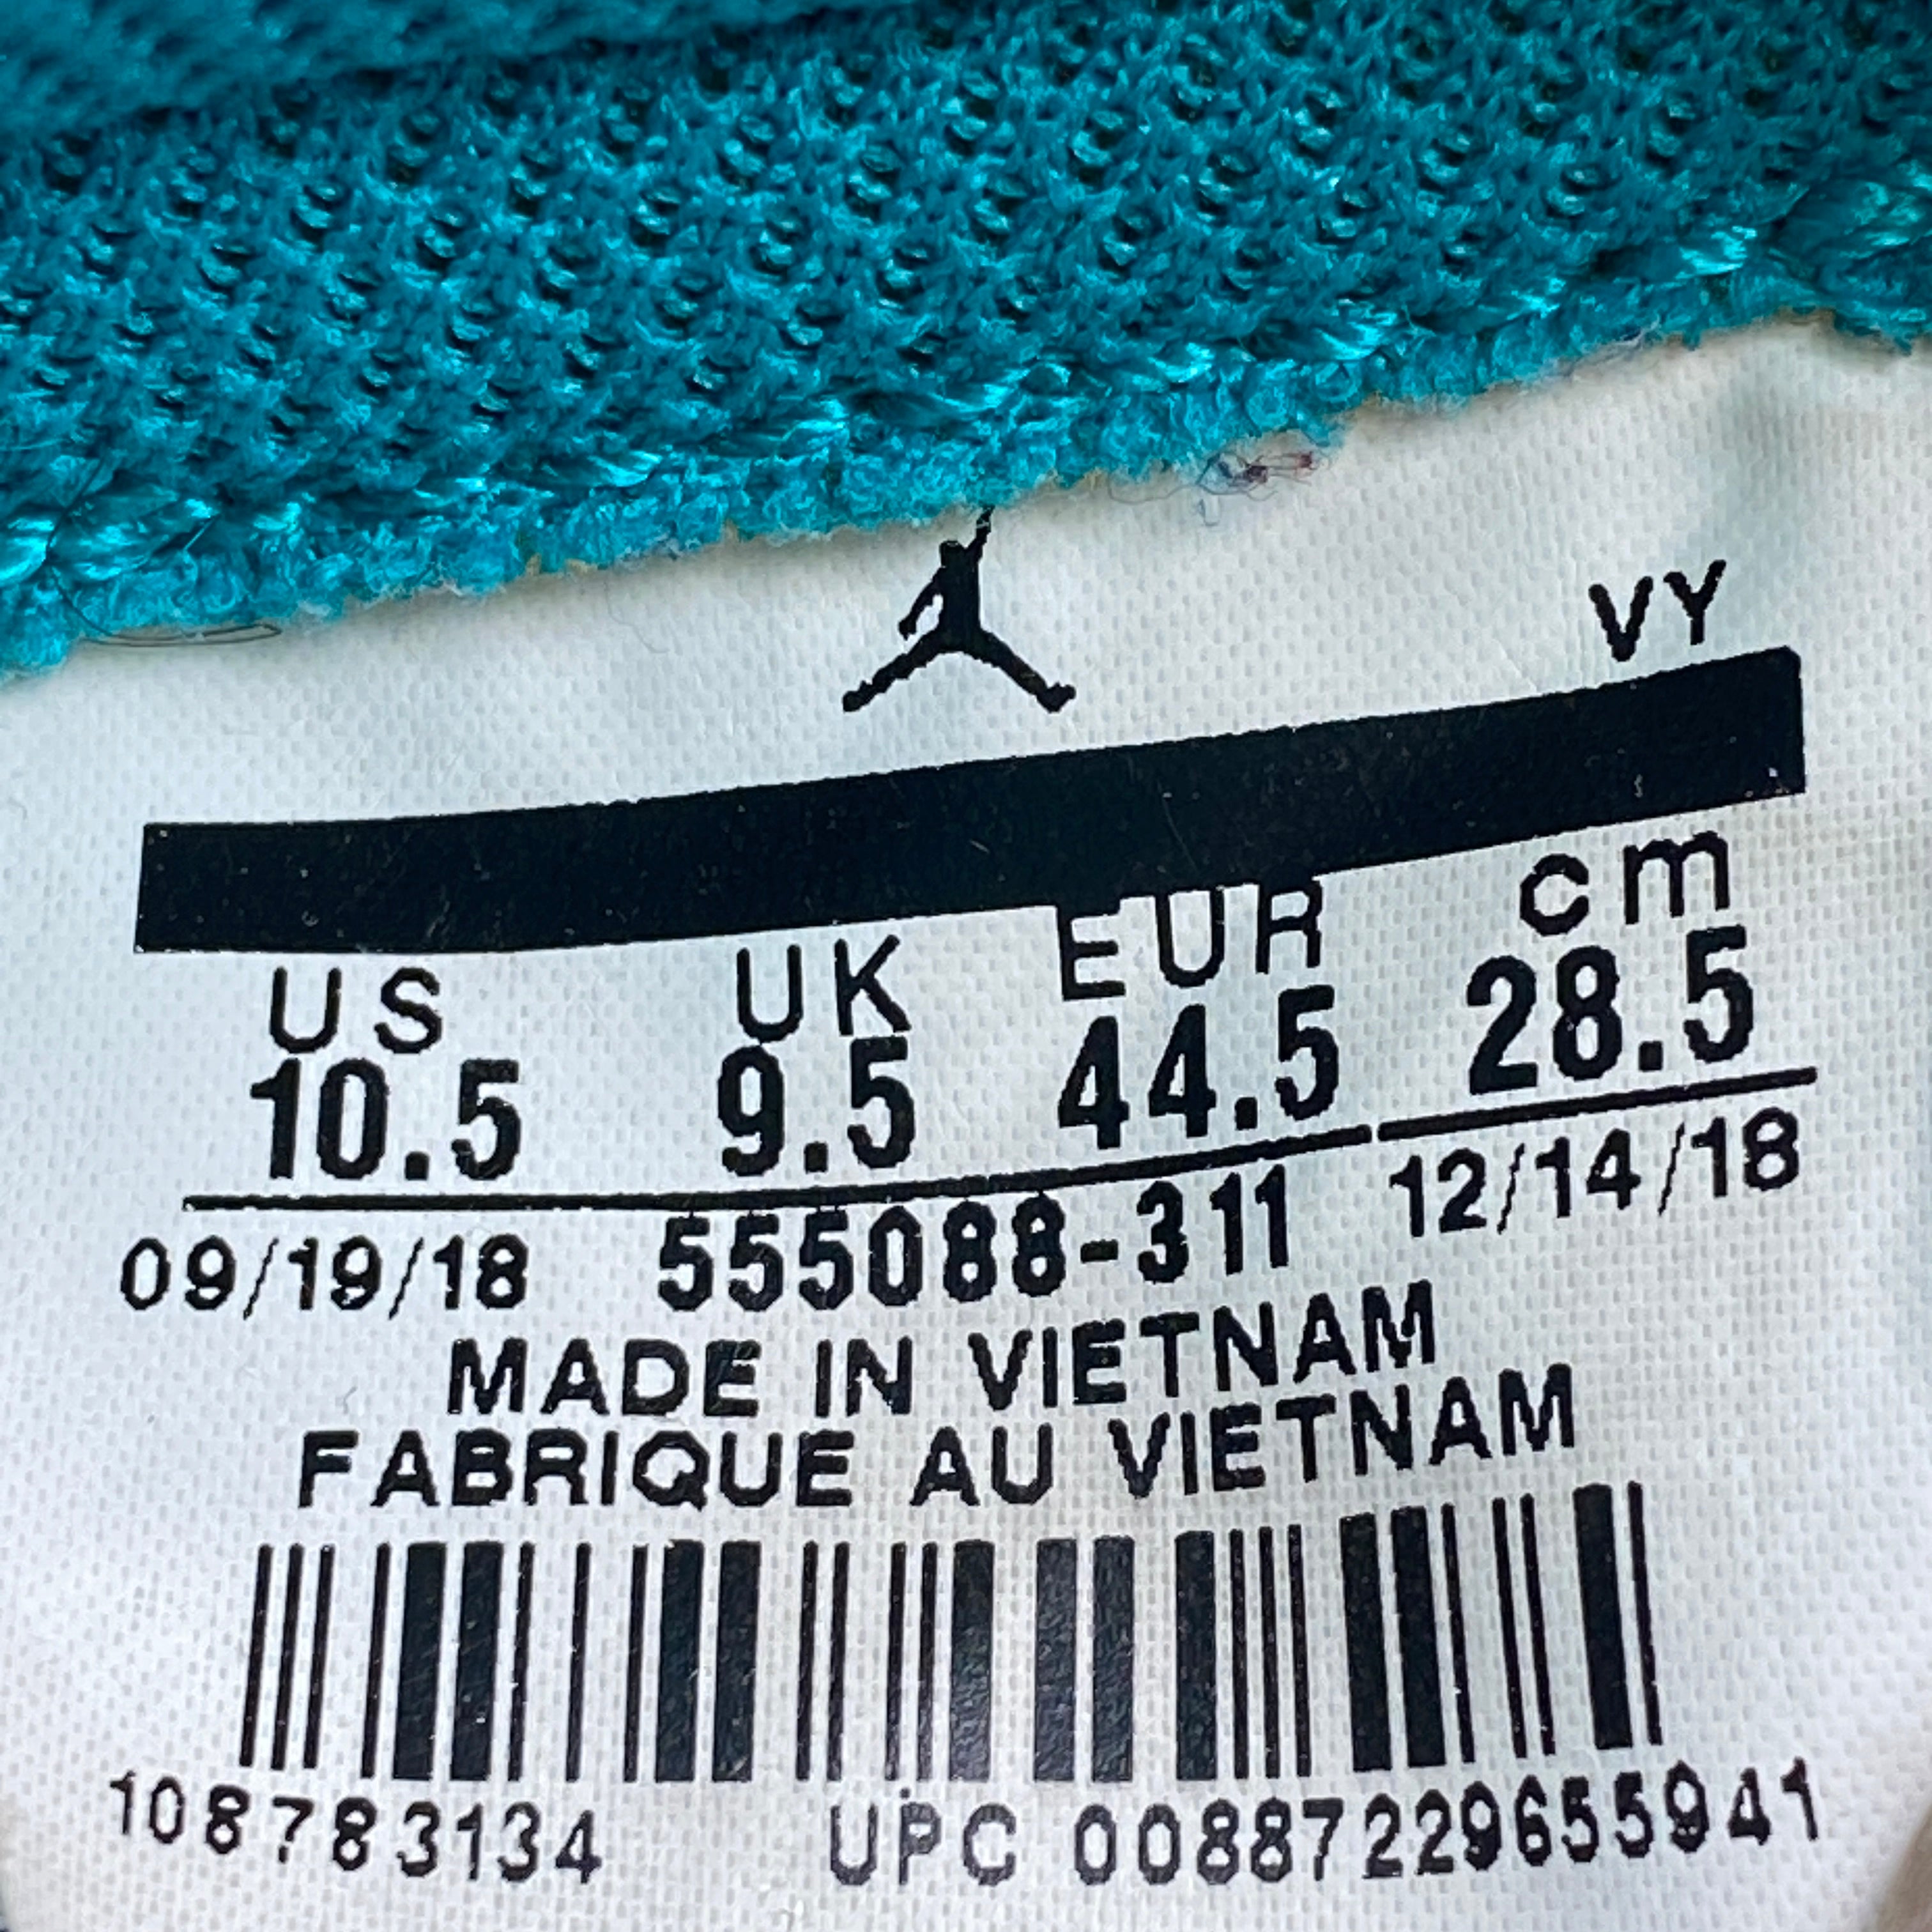 Air Jordan 1 Retro High OG &quot;Turbo Green&quot; 2018 Used Size 10.5